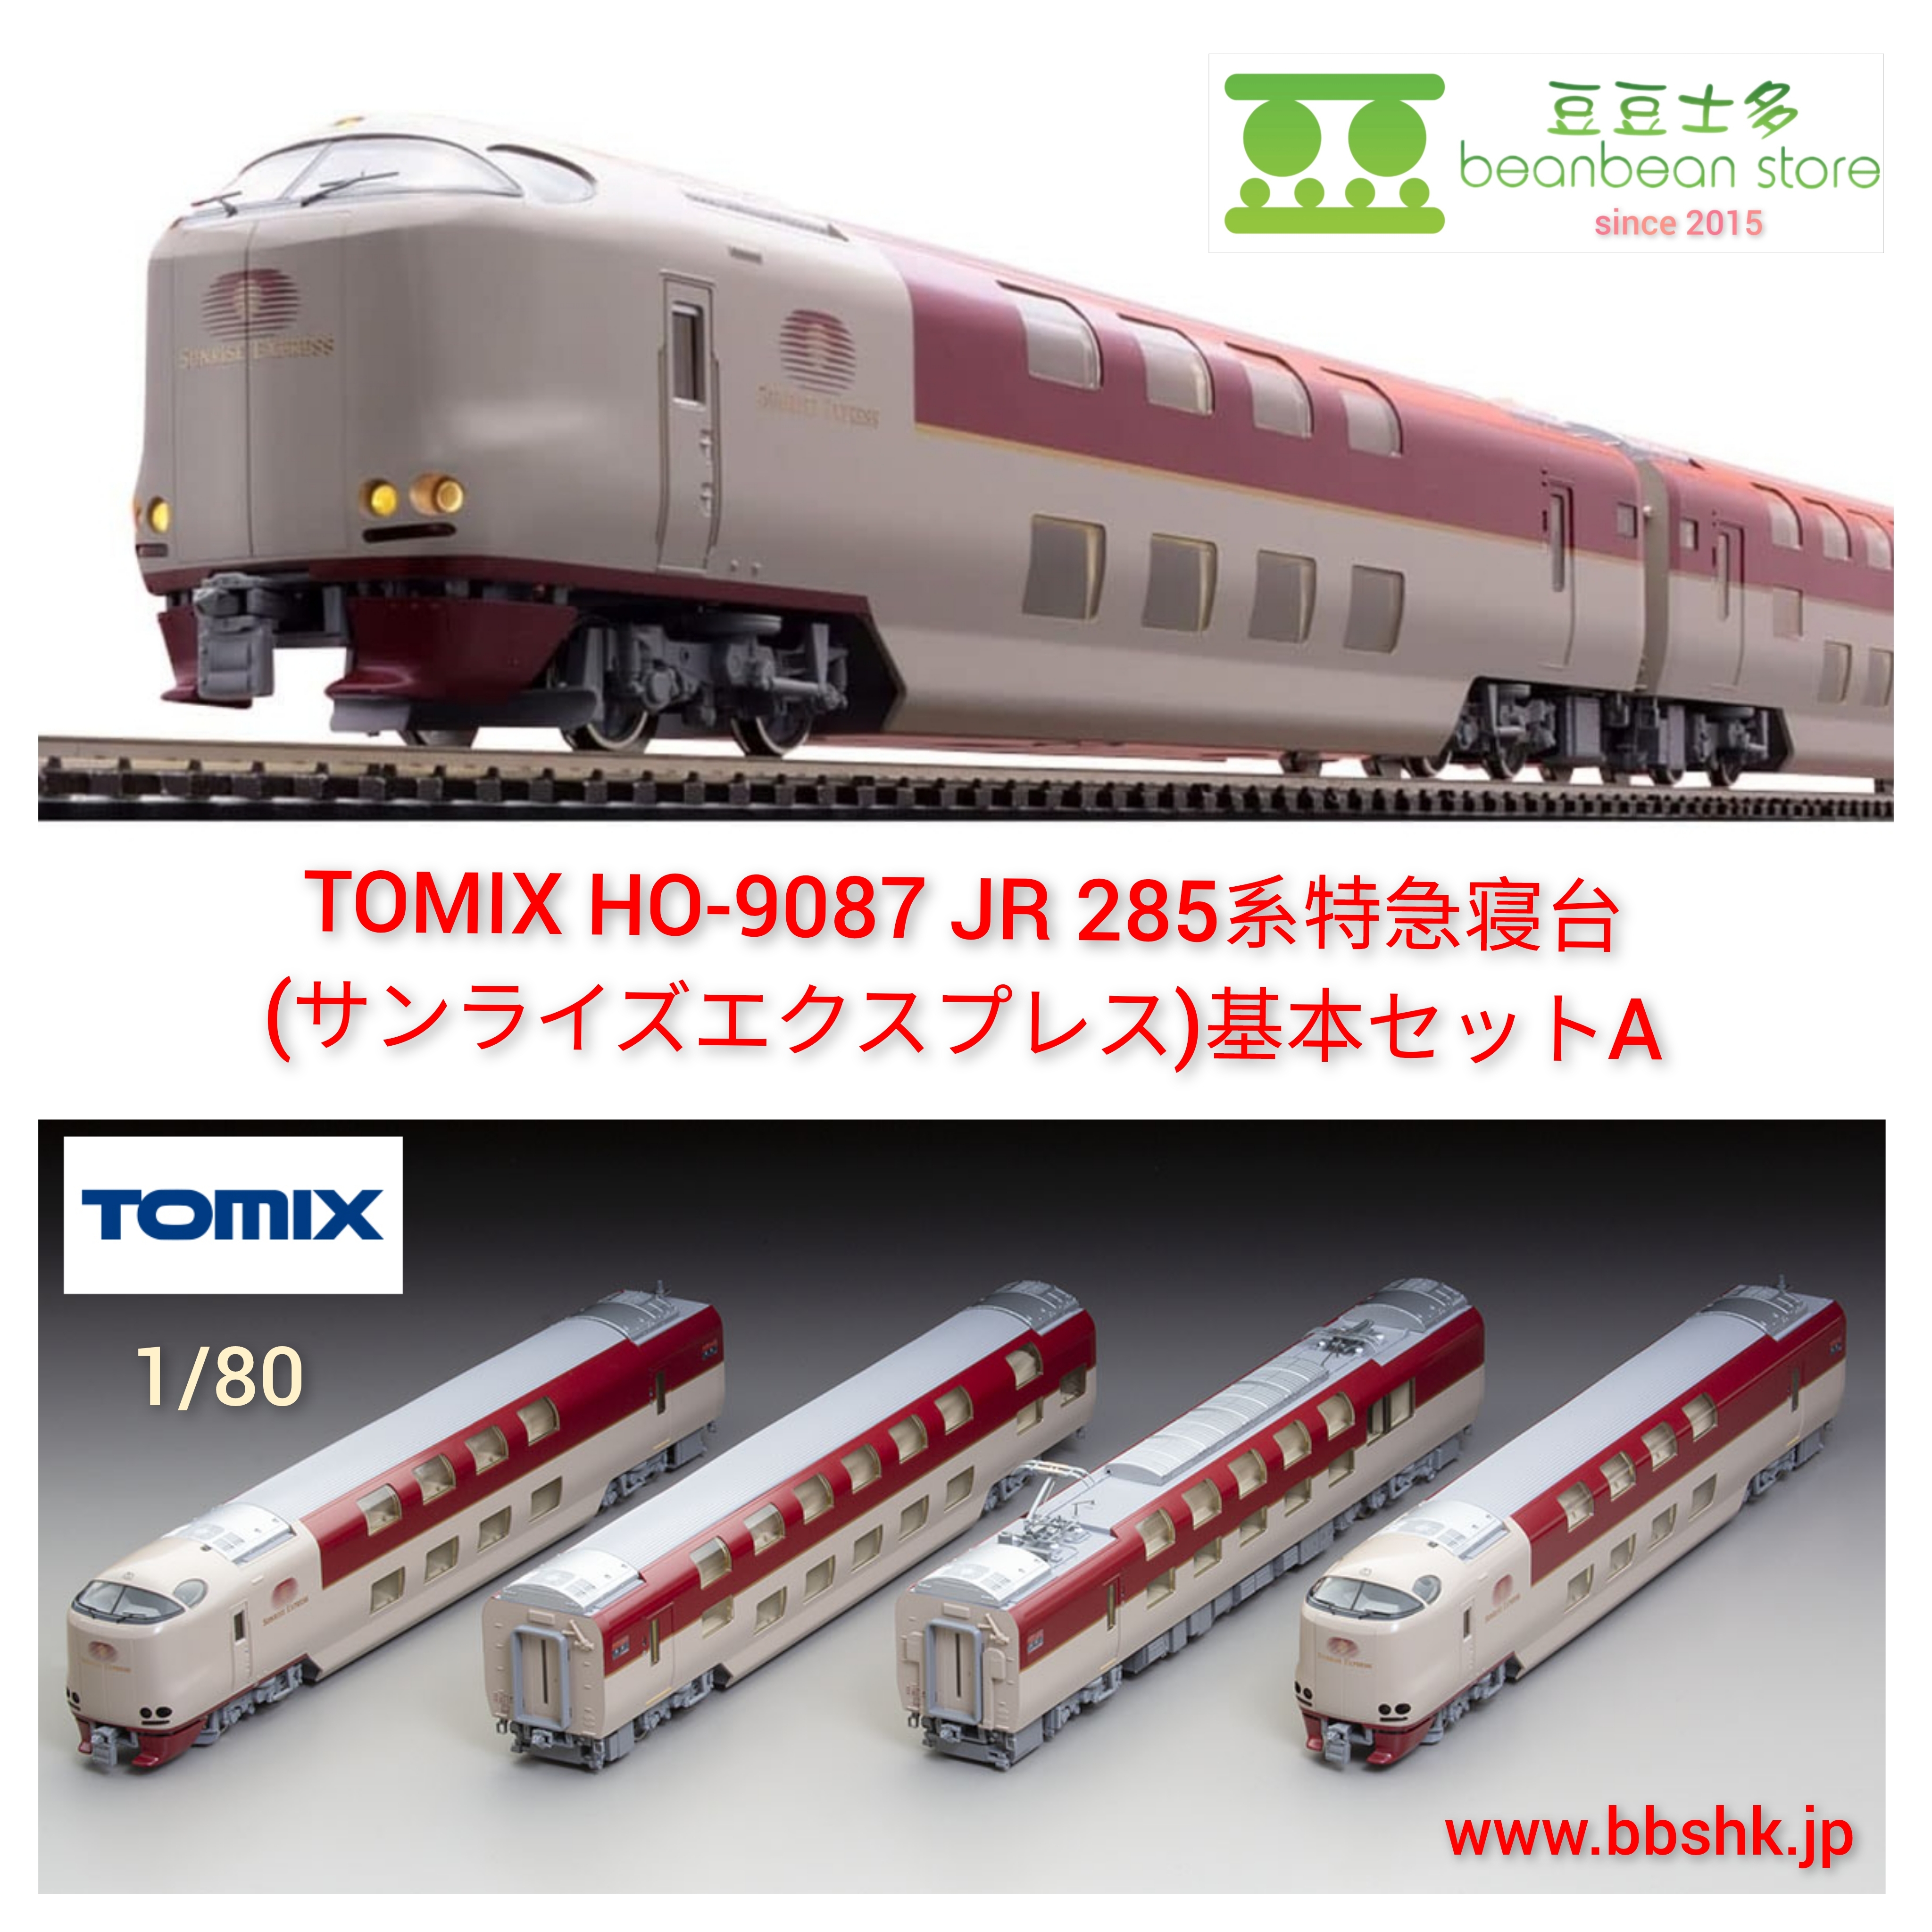 TOMIX HO-9087 (HO) JR 285系 